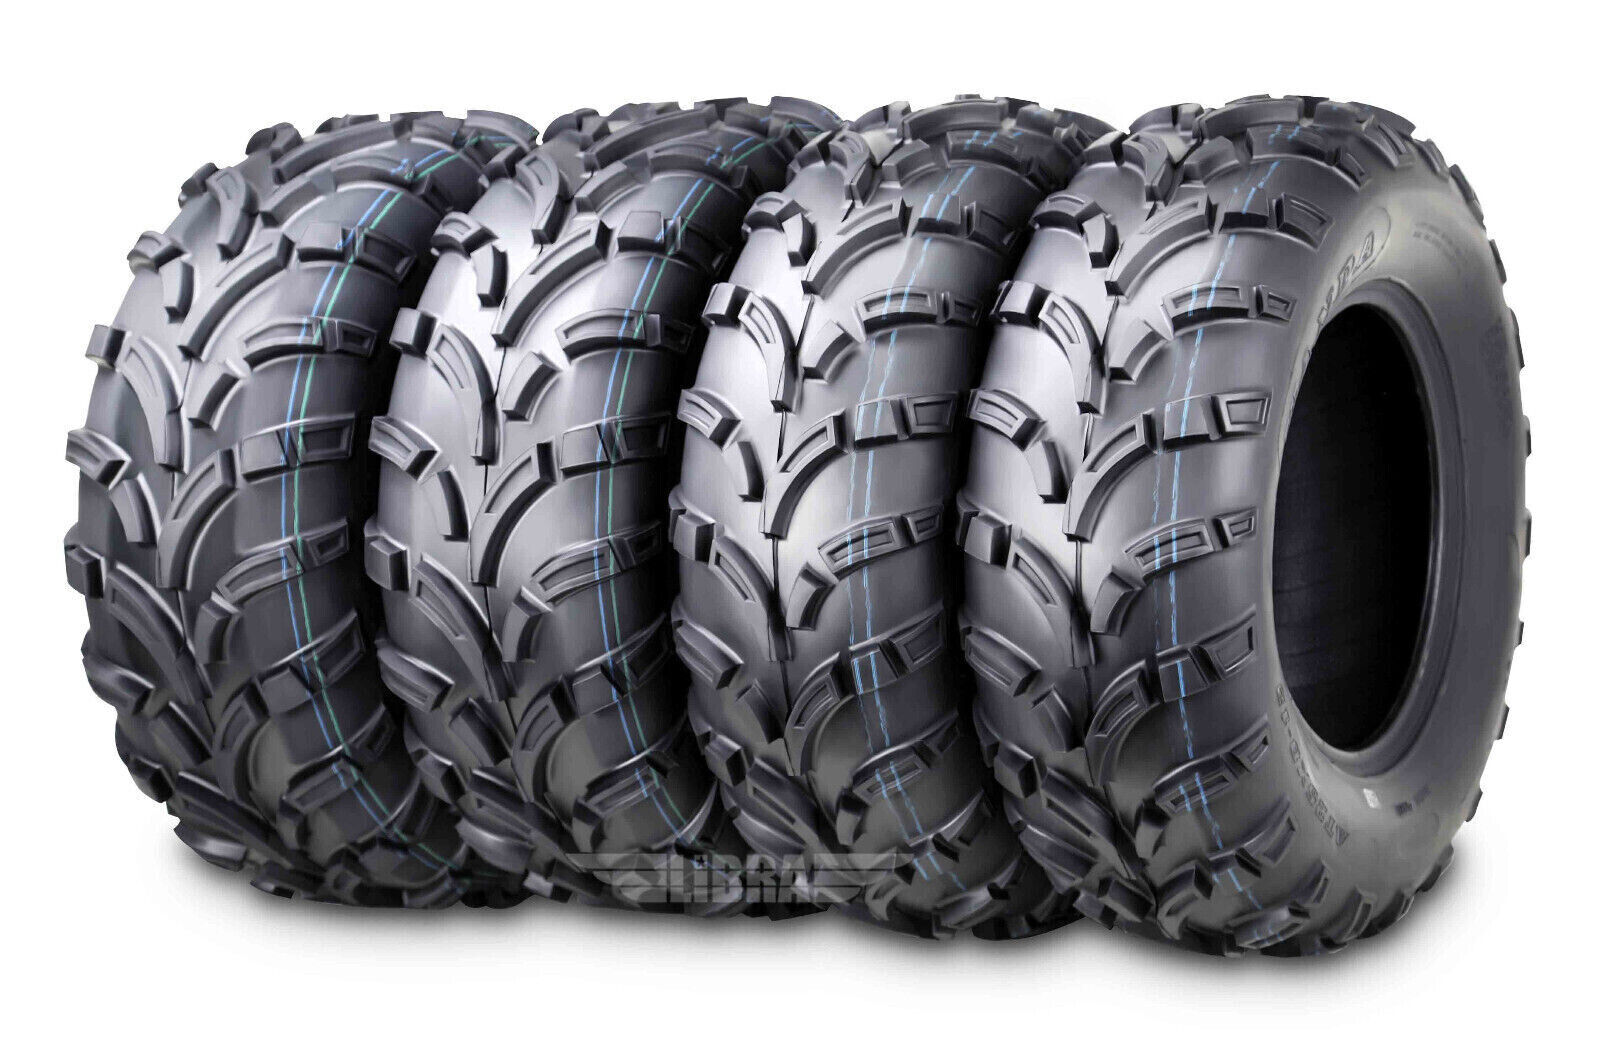 25x10-12 25x11-12 High Load ATV tires for 05-09 Polaris Ranger 2X4/4X4/XP